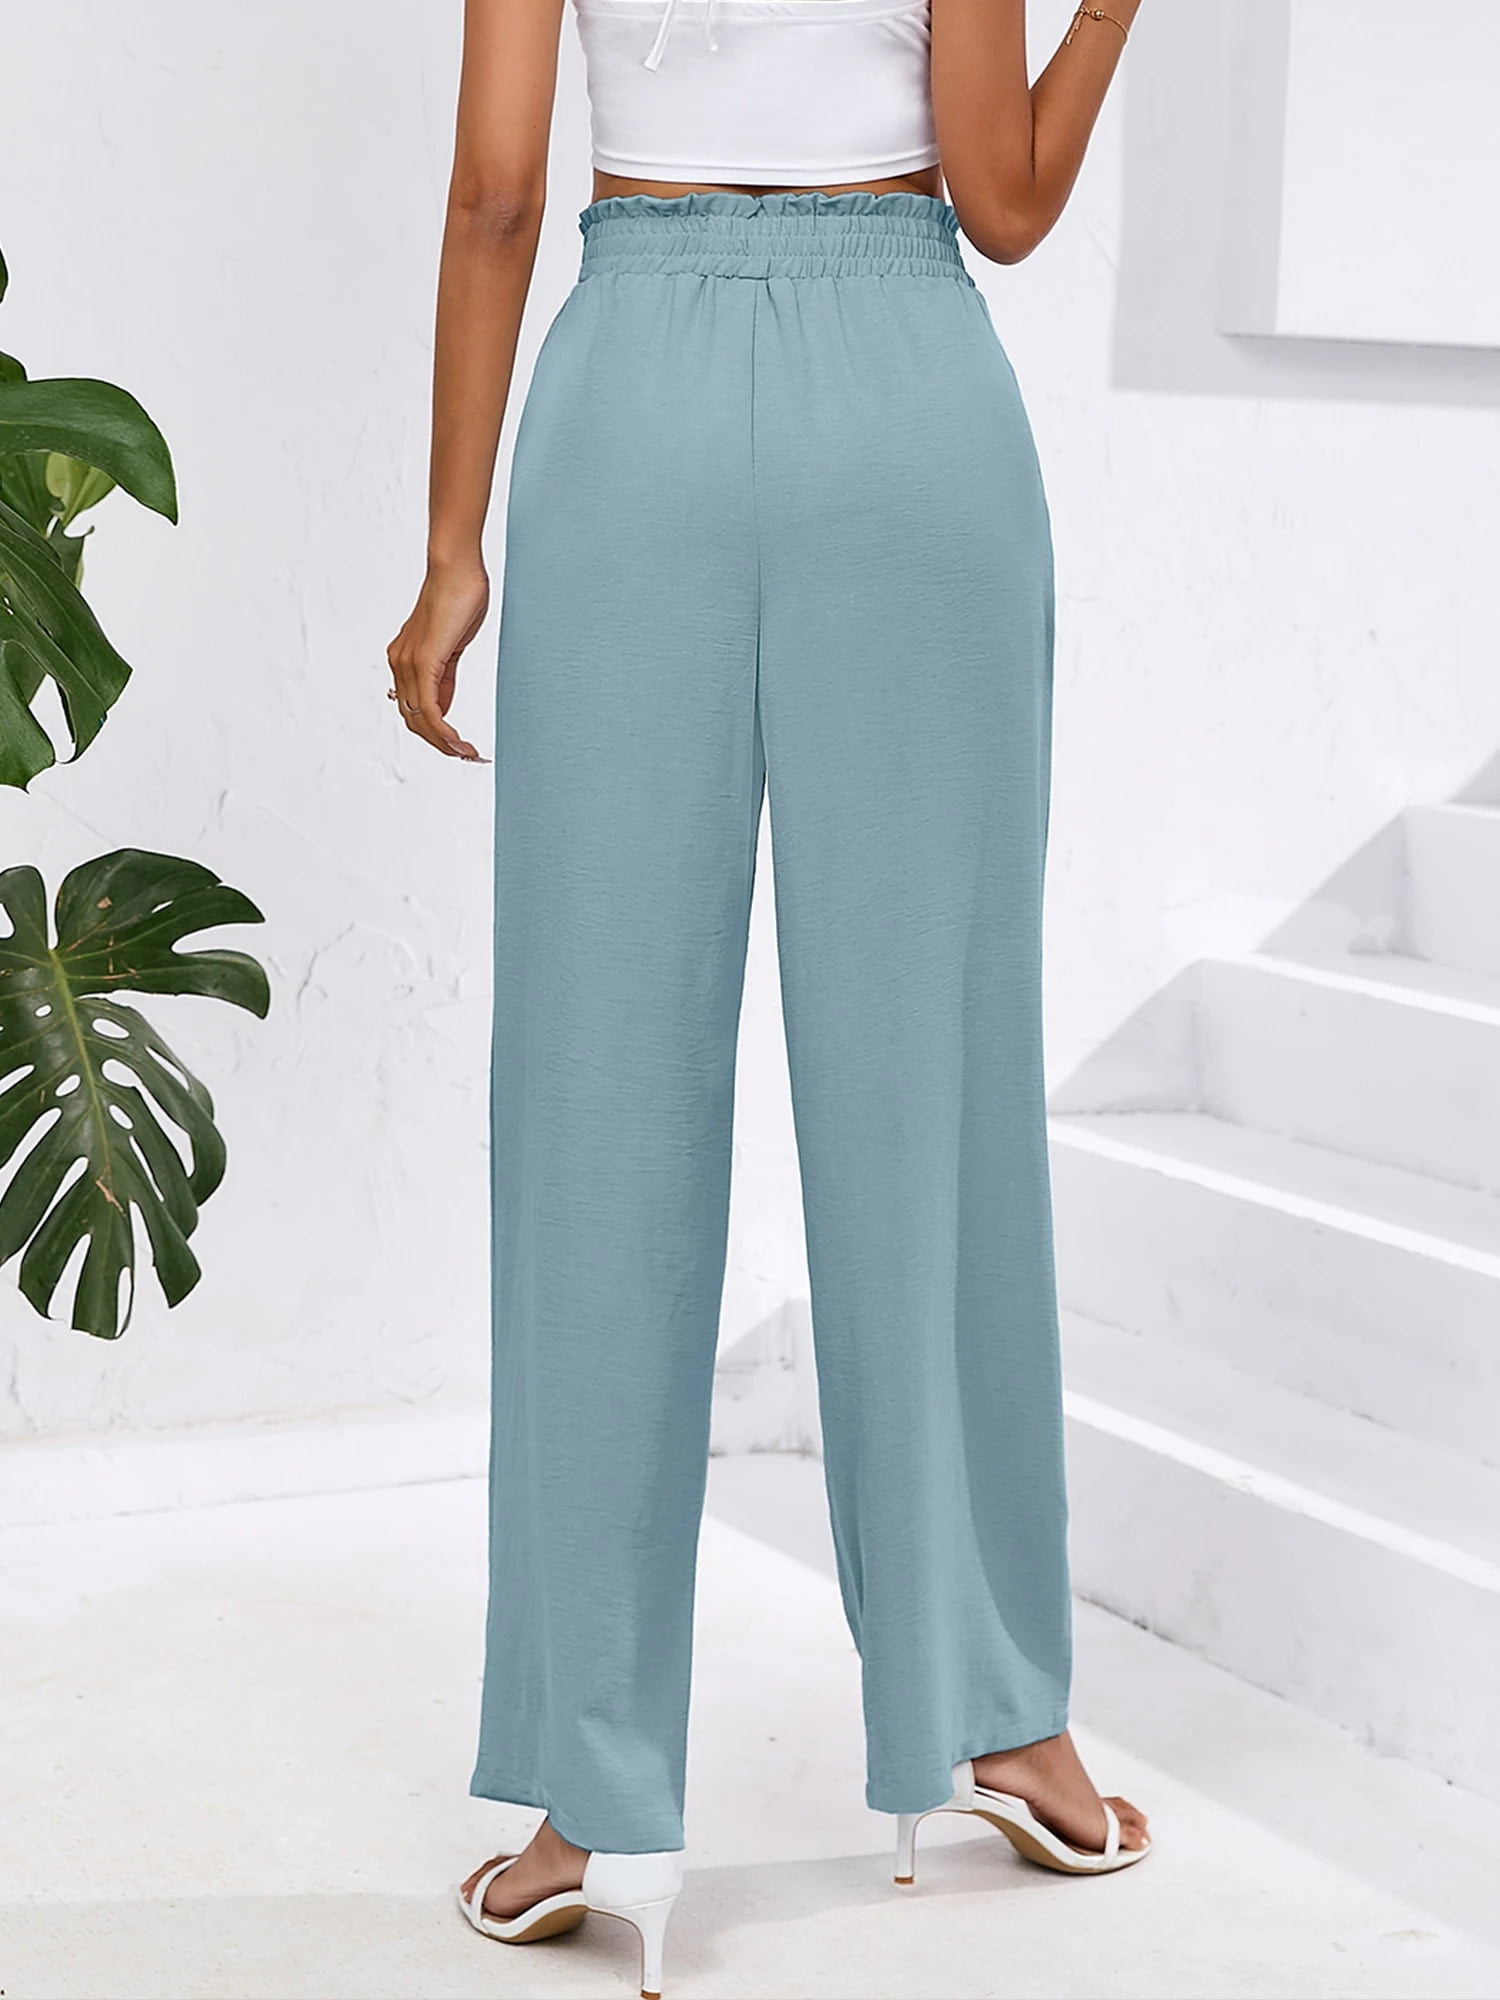 Zara | Pants & Jumpsuits | Zara High Waisted Belted Pants Ecru | Poshmark